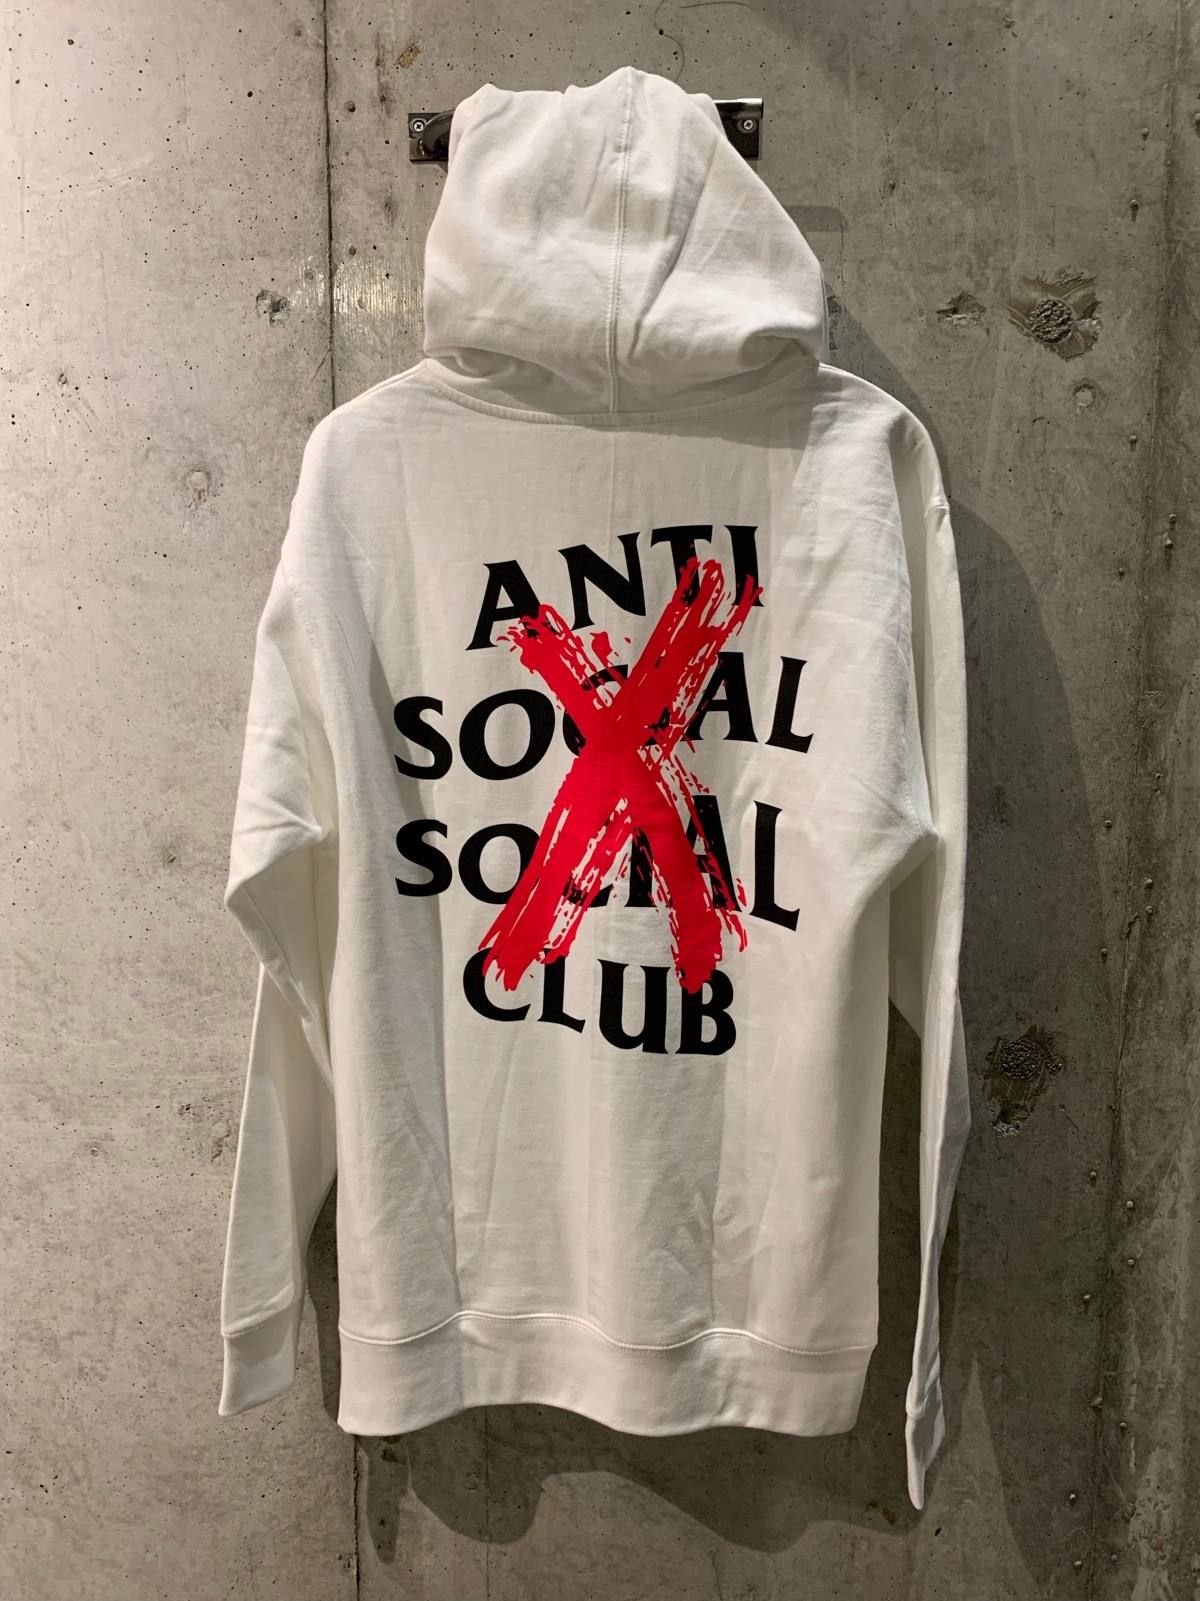 Anti Social Social Club - アンチソーシャルソーシャルクラブ |通販